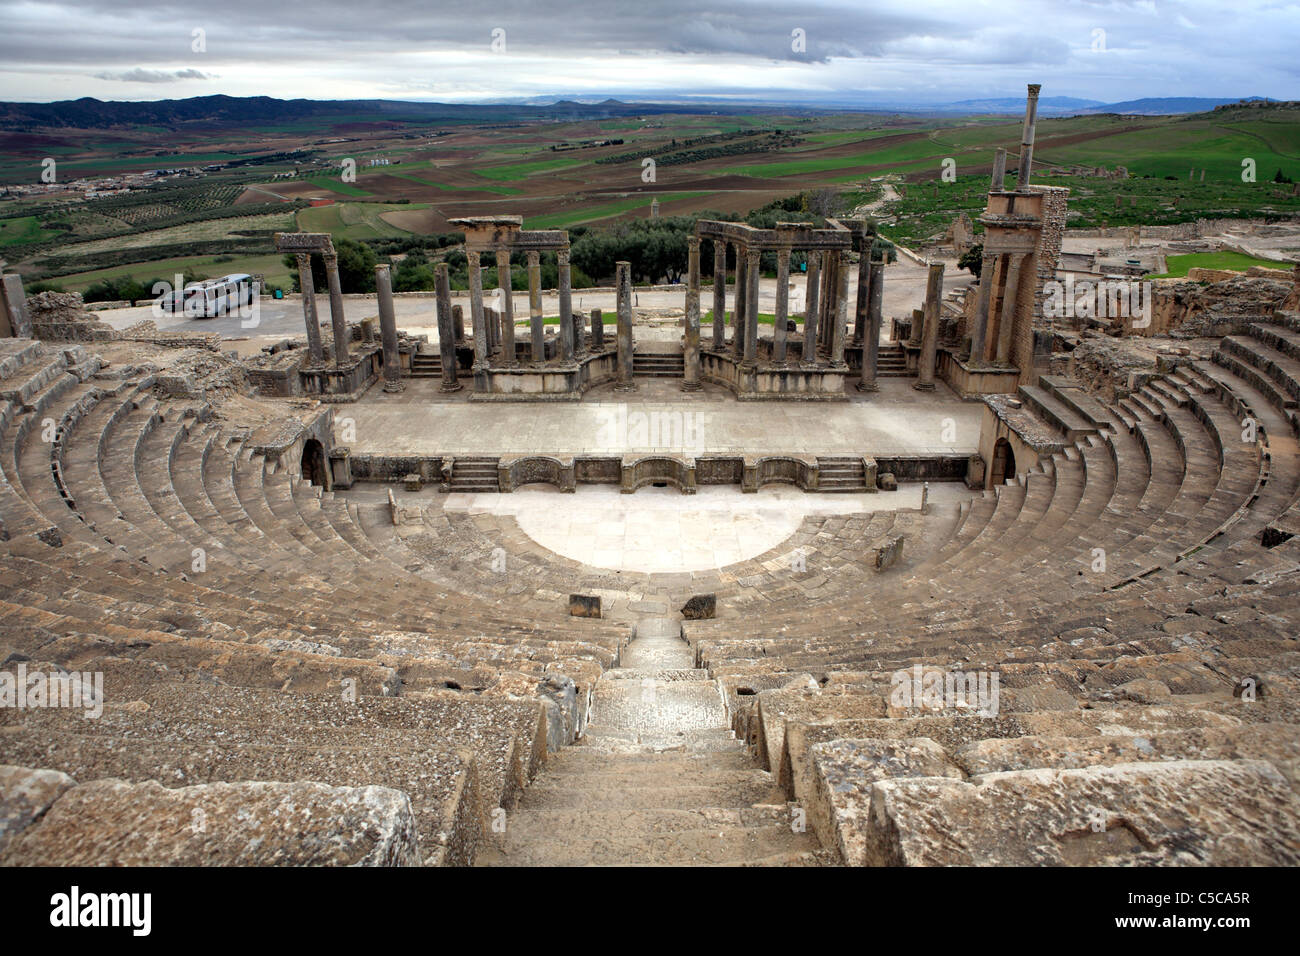 Théâtre romain (168 AD), Dougga (Thugga), UNESCO World Heritage Site, Tunisie Banque D'Images